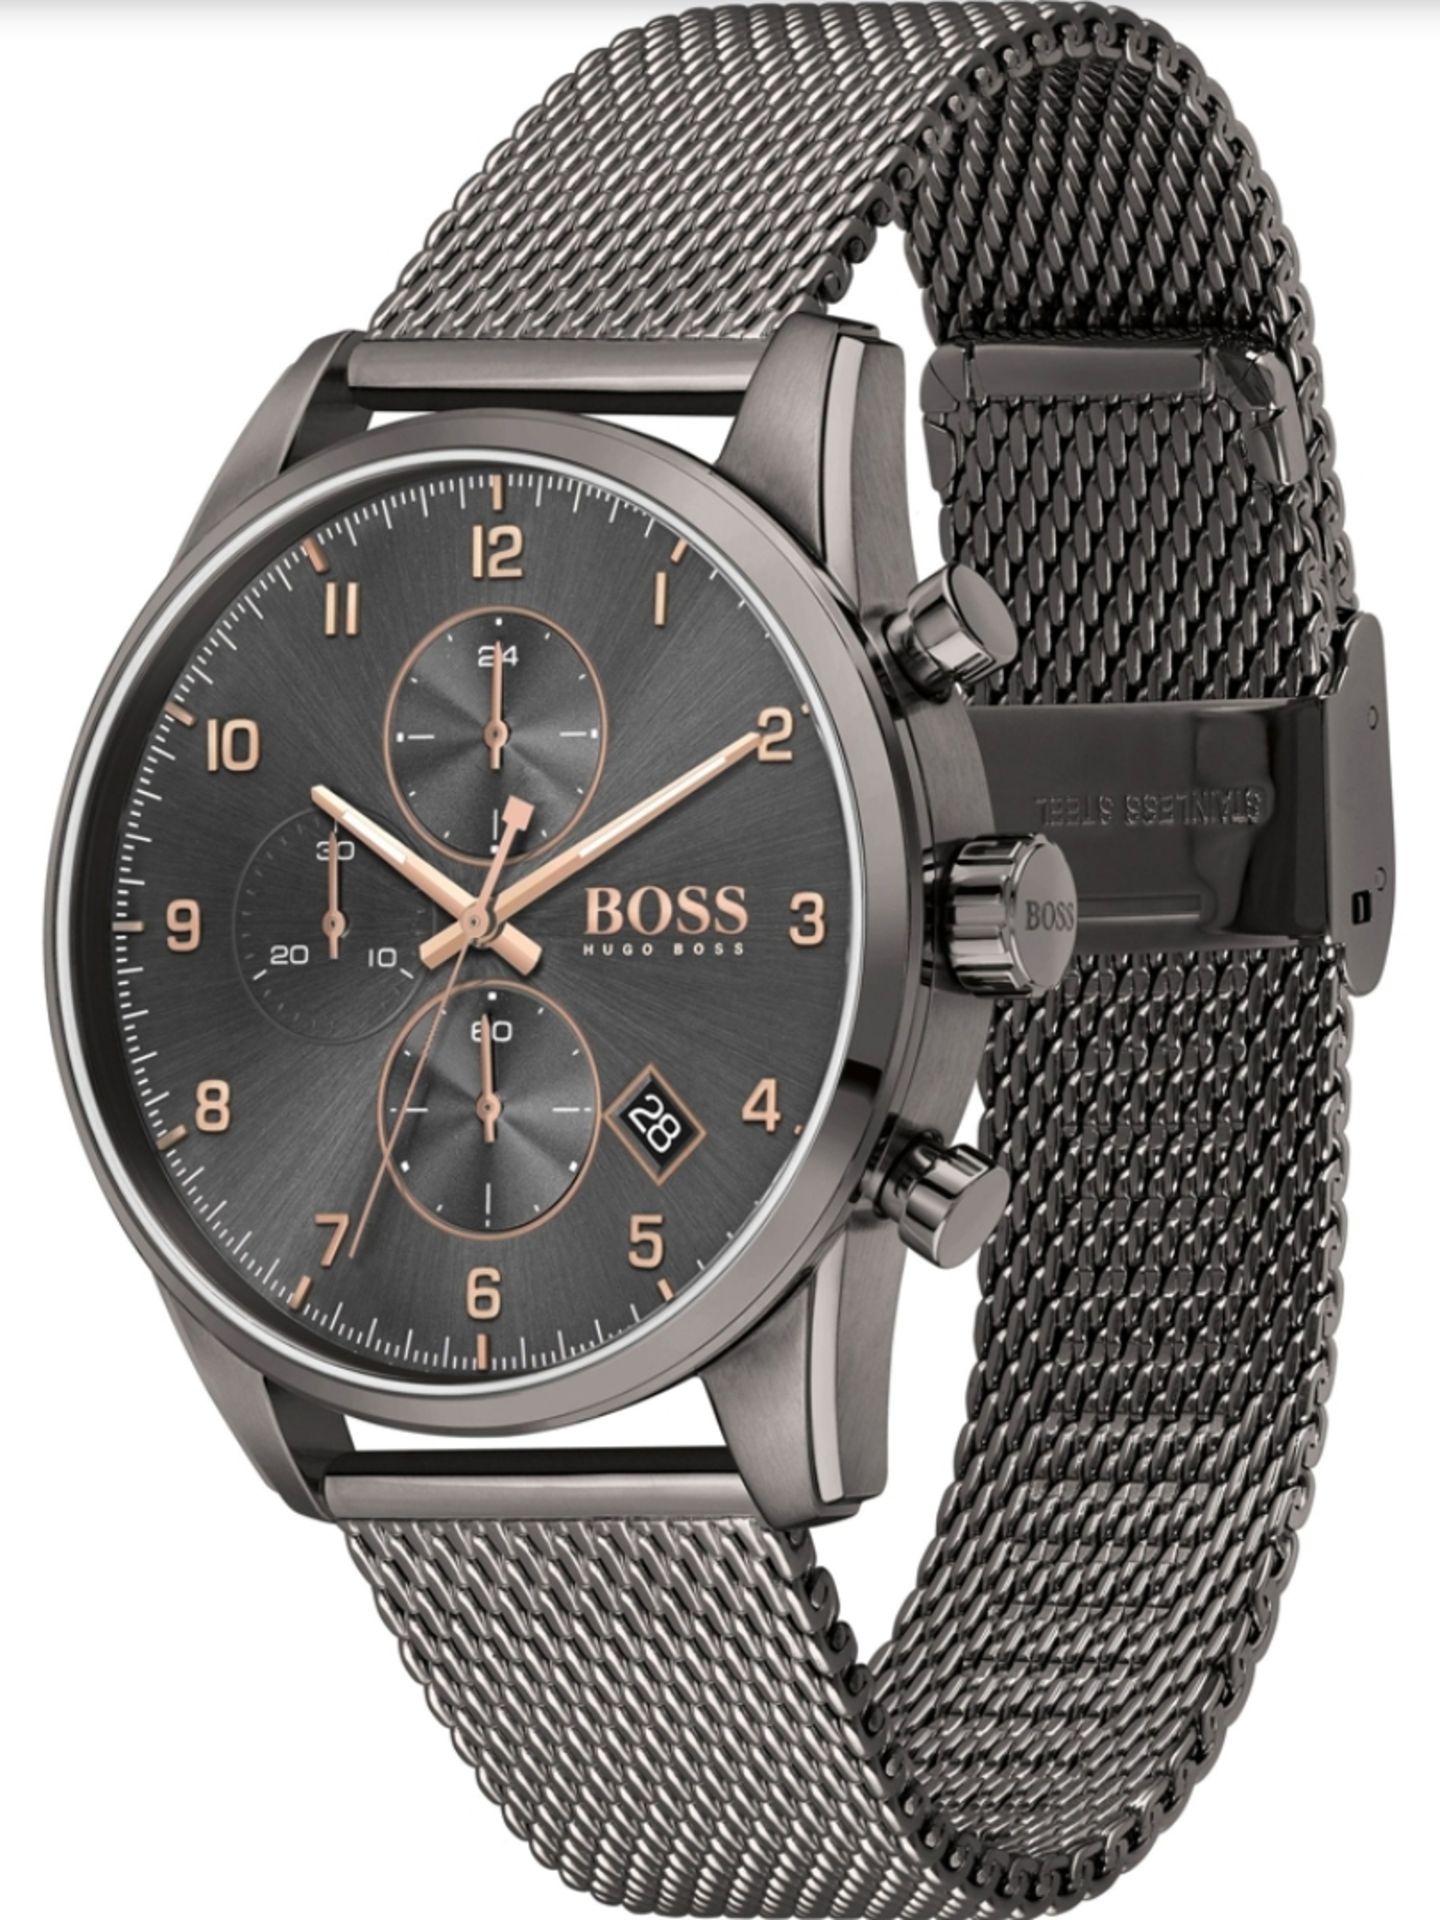 Hugo Boss 1513837 Men's Skymaster Grey Mesh Band Quartz Chronograph Watch - Image 3 of 6